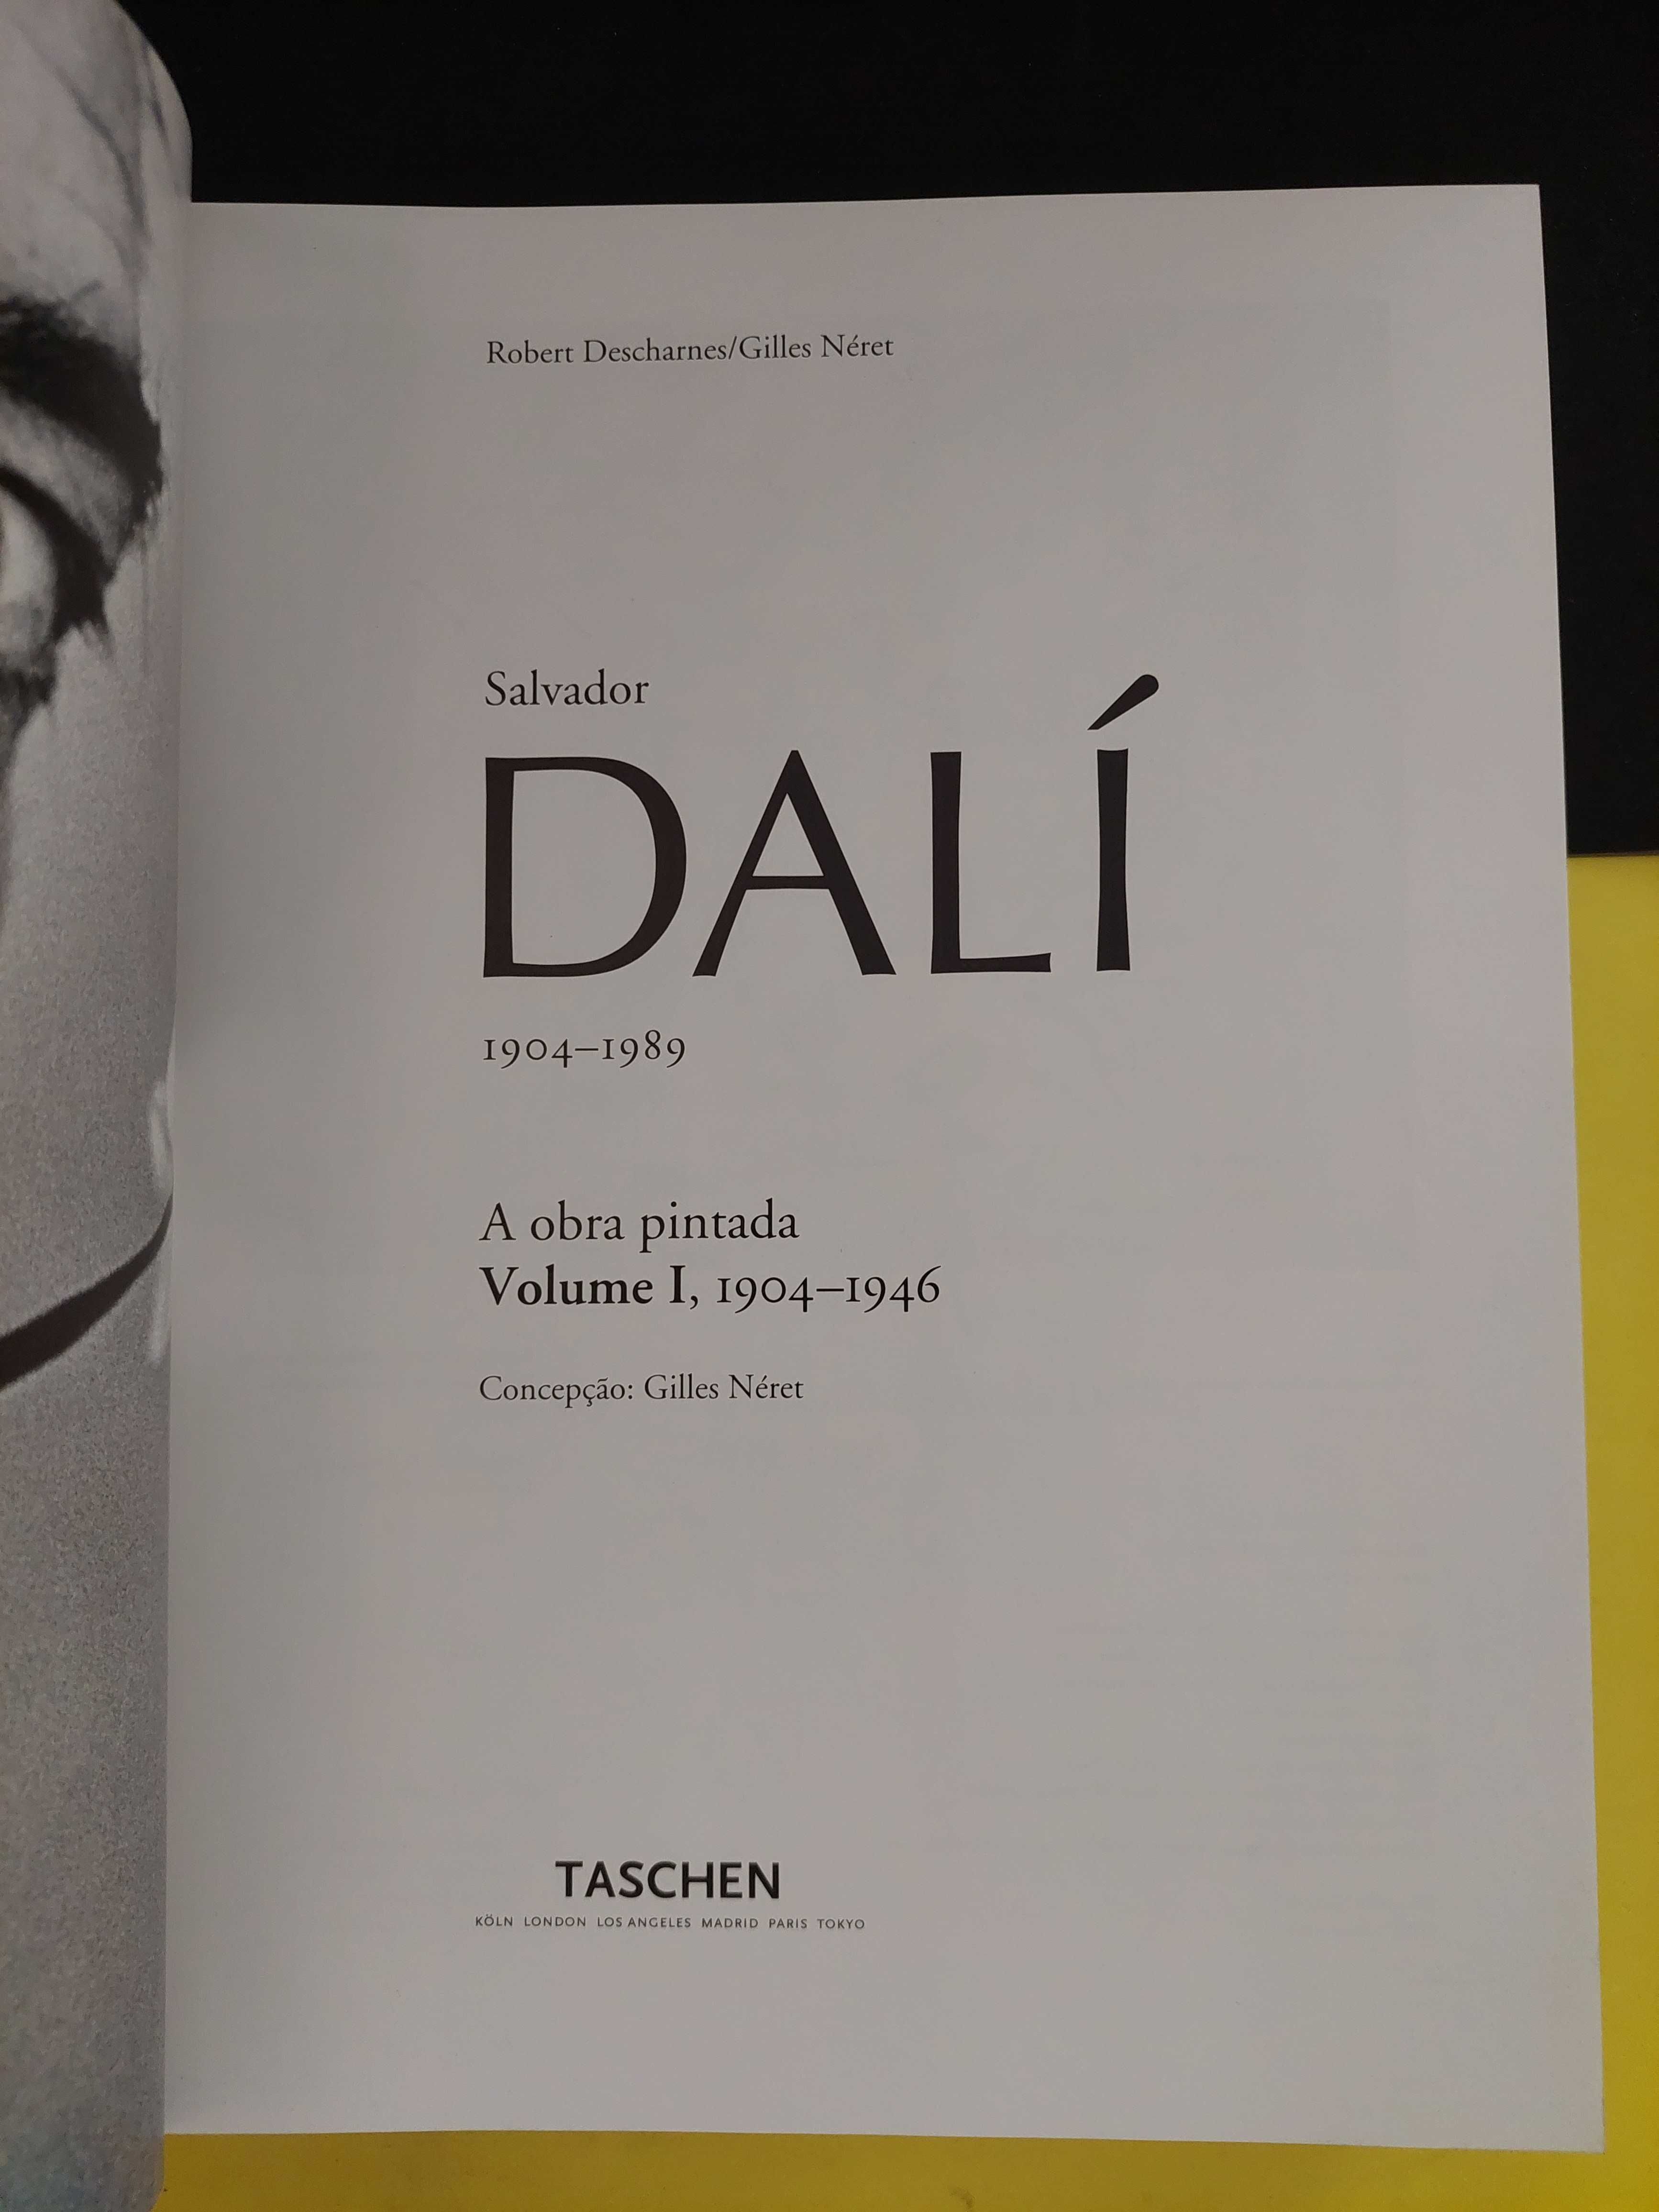 Robert Descharnes and Gilles Néret - Dalí: a obra Pintada, vol 1 e 2